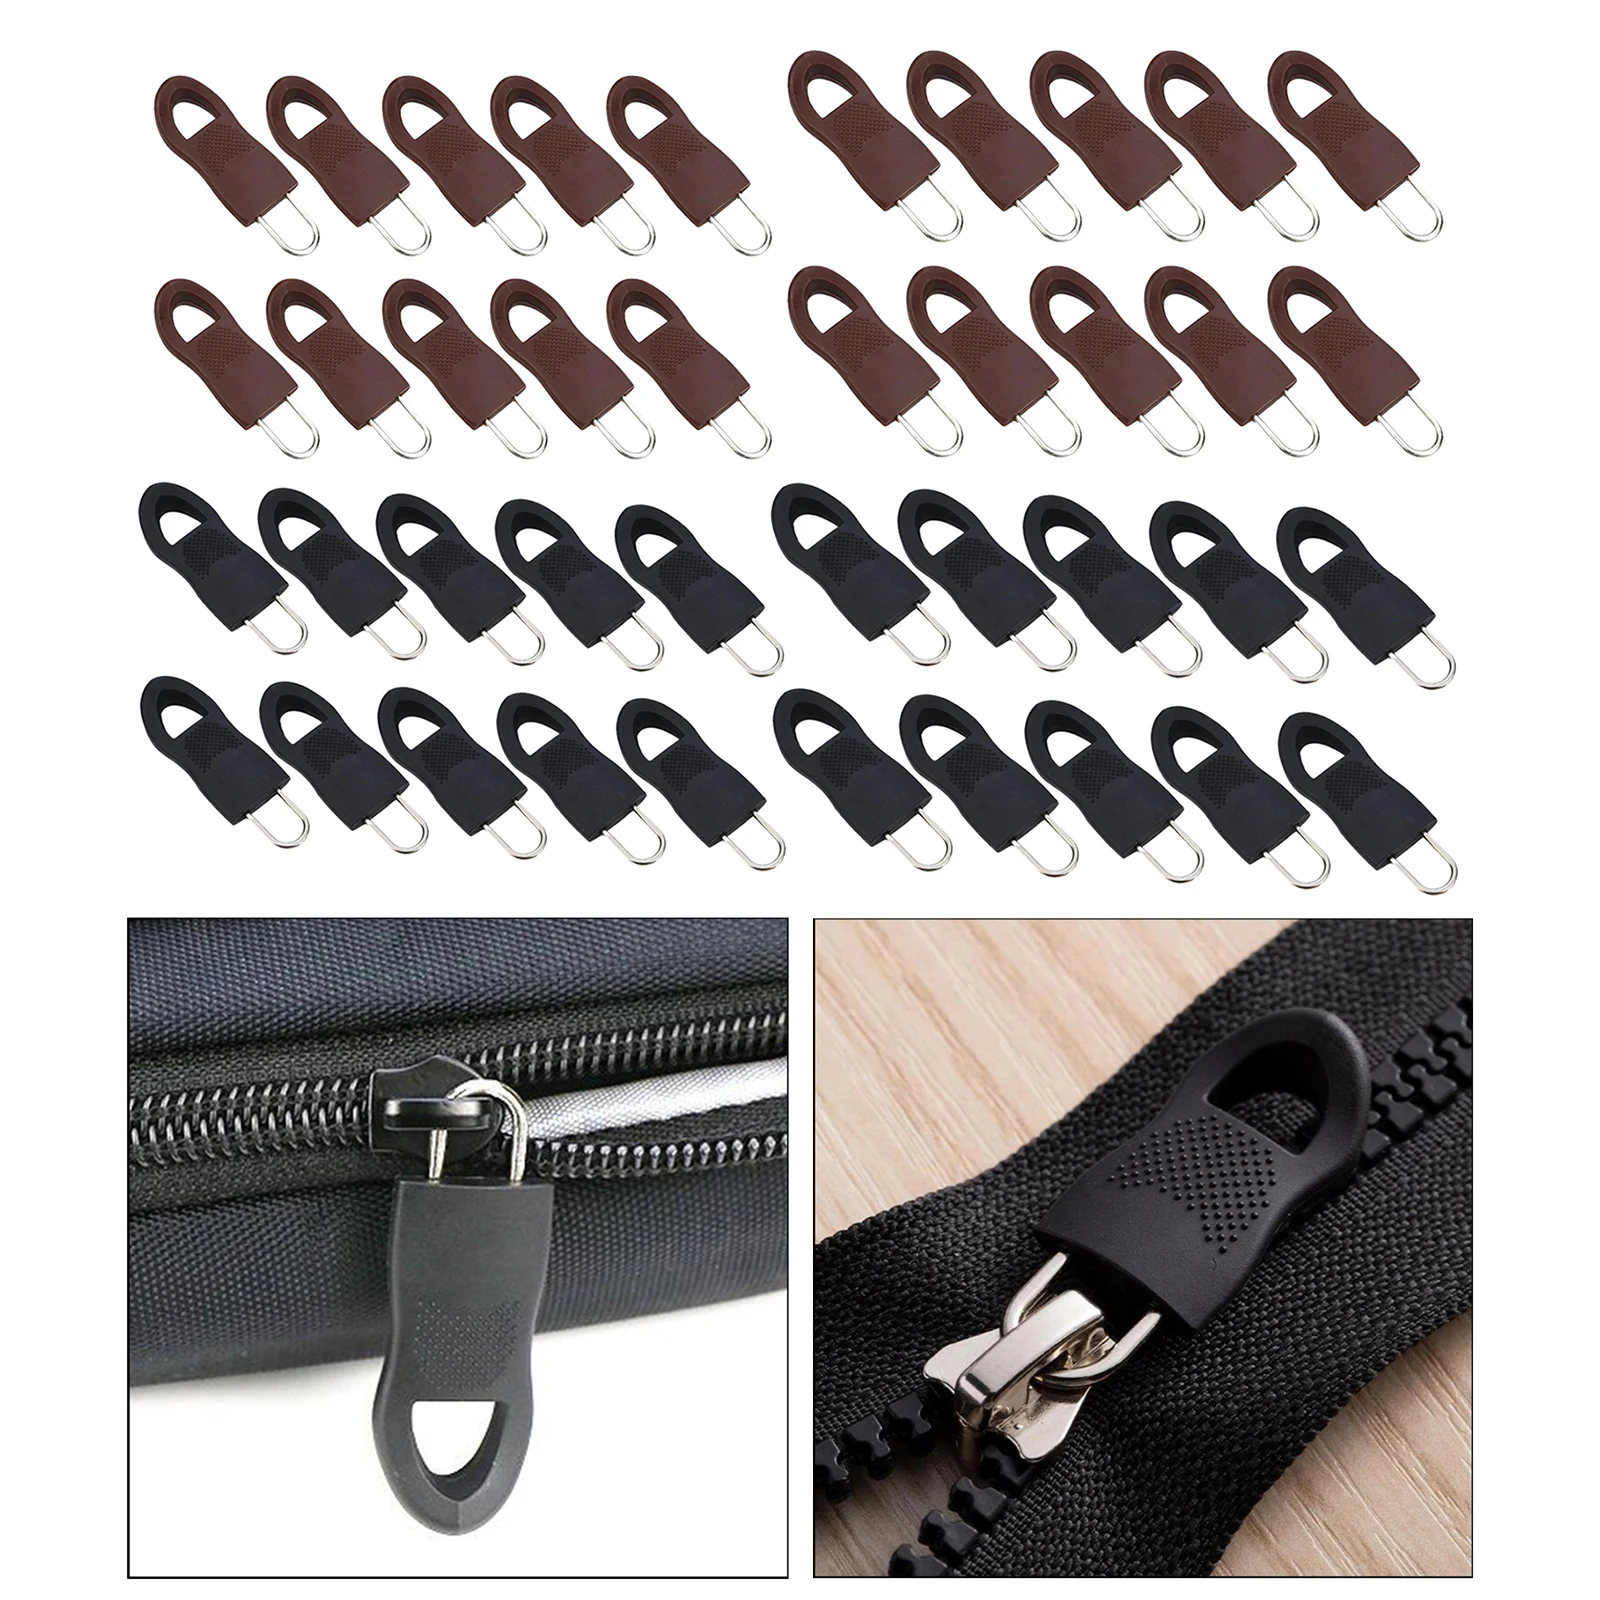 10Pcs Detachable Zip Fixer Replacement Zipper Tags Repair Pull Tab, Universal Detachable Zipper Puller Set